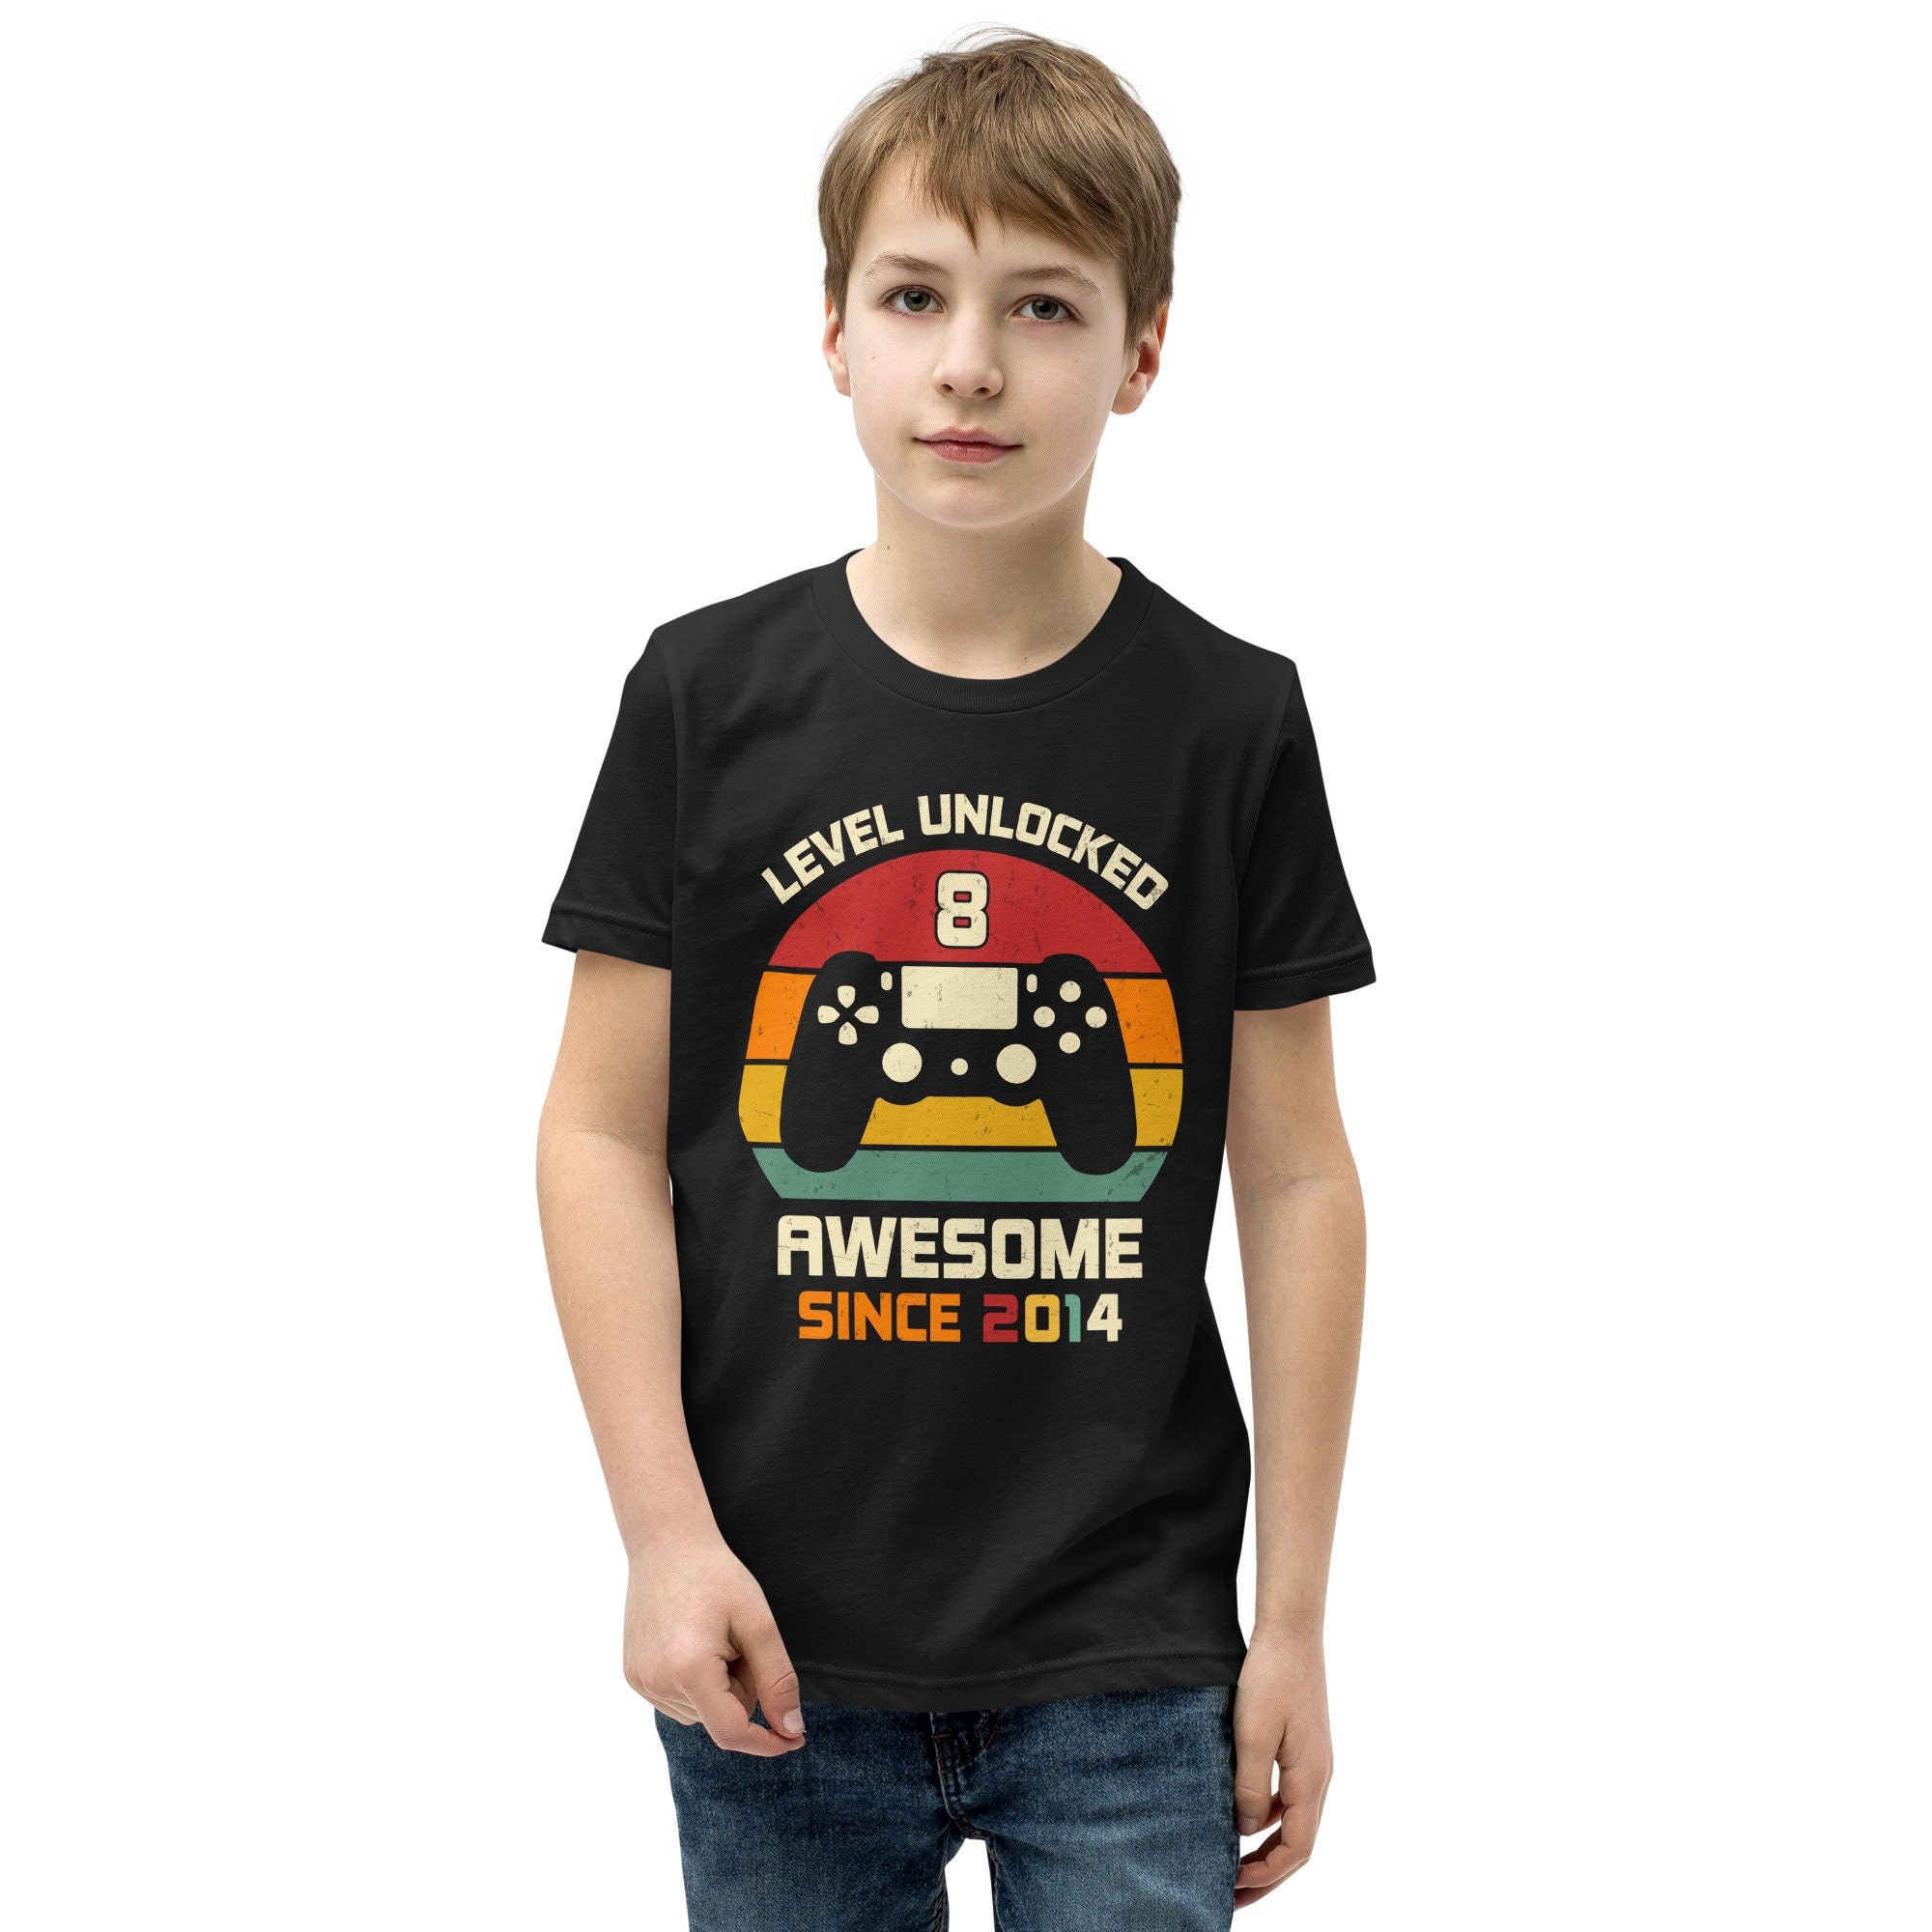 Eighth Birthday Boy Shirt Birthday Boy Level 8 Unlocked Shirt Gaming Boy Shirt Eighth Years Old Shirt 8th Birthday Boy Gamer Shirt